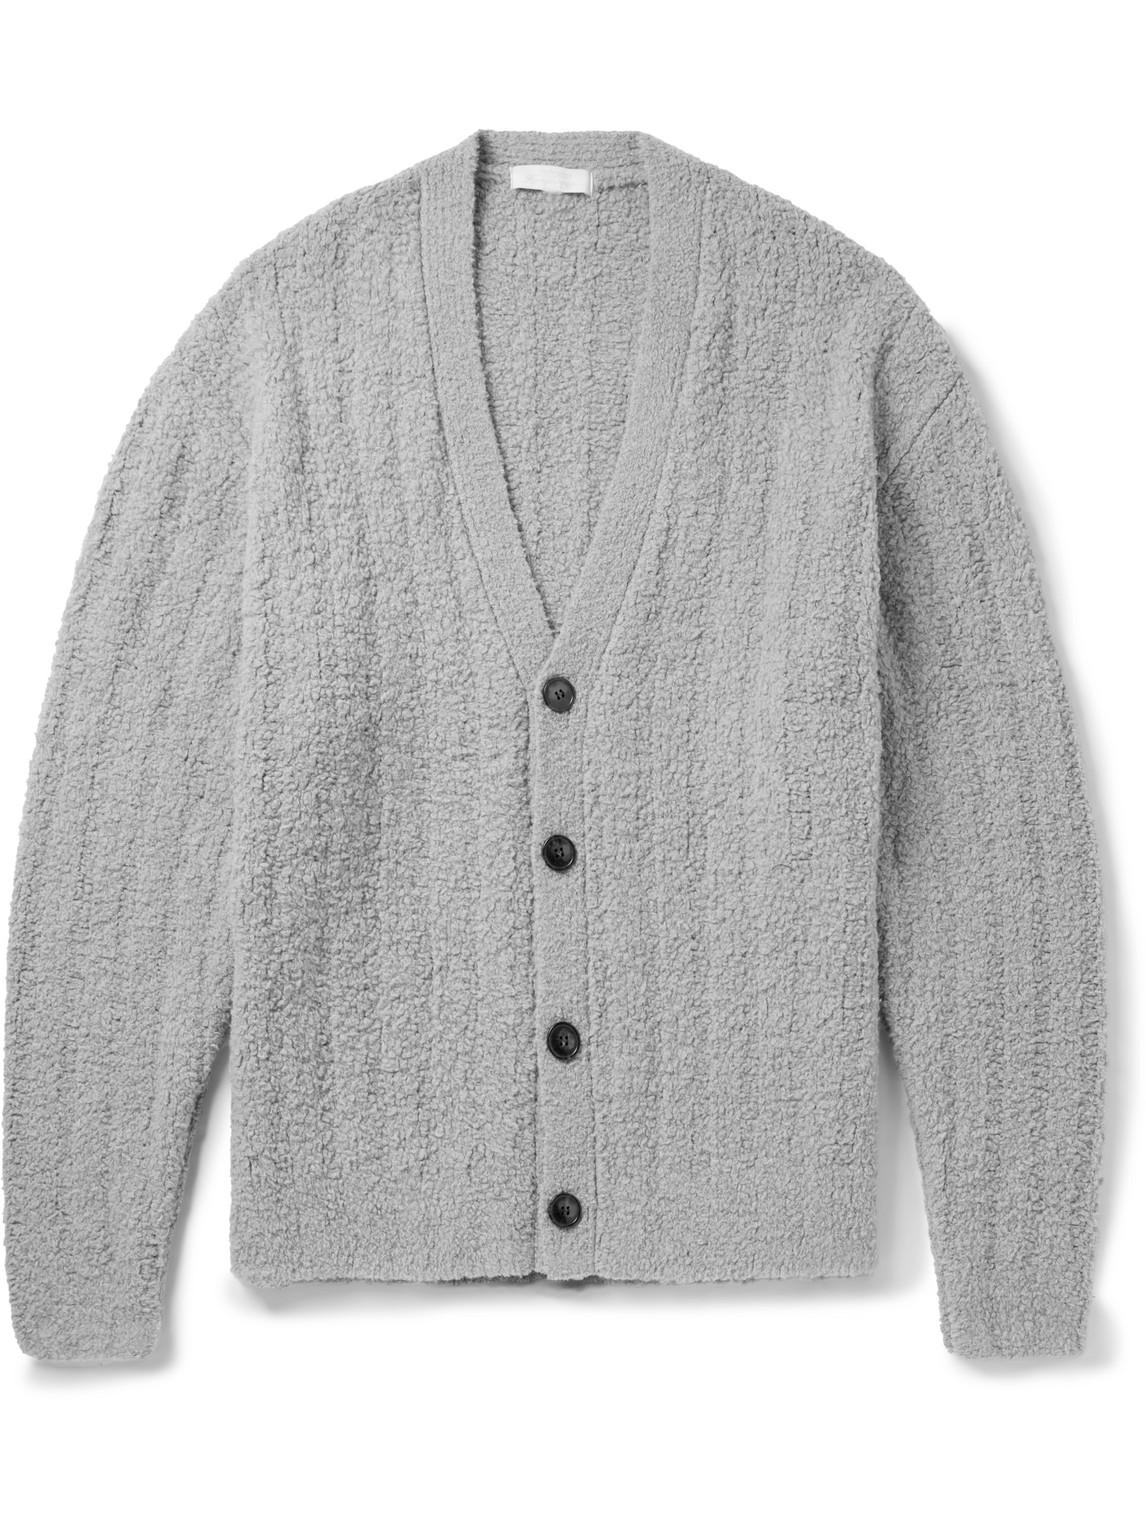 mfpen - House Ribbed Wool-Blend Bouclé Cardigan - Men - Gray - XL von mfpen